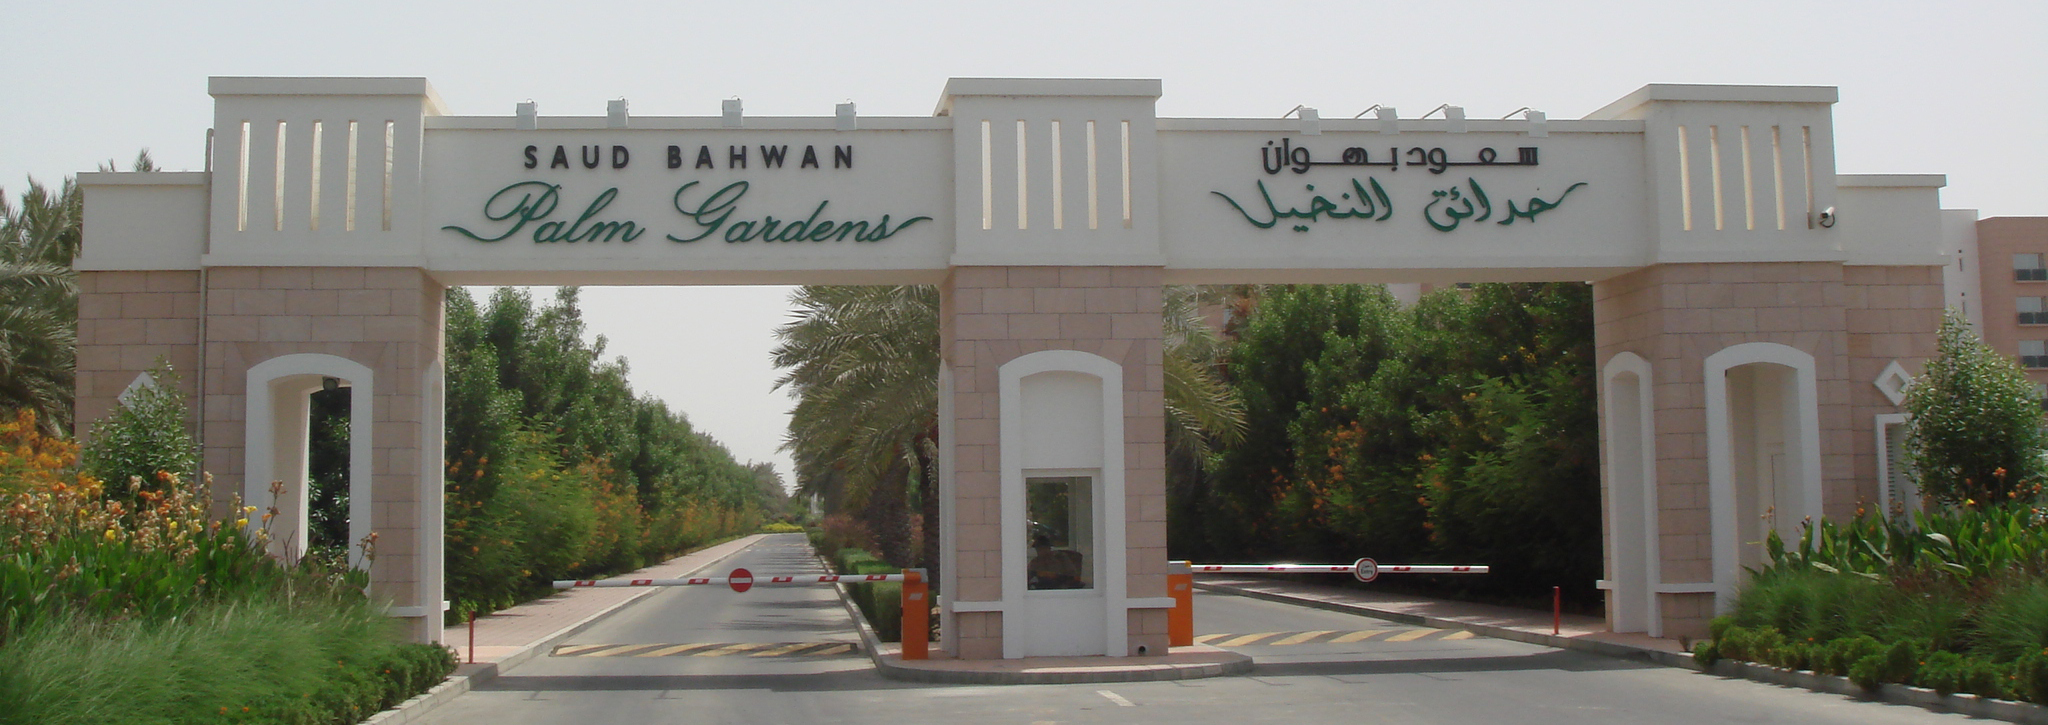 Saud Bahwan Palm Garden